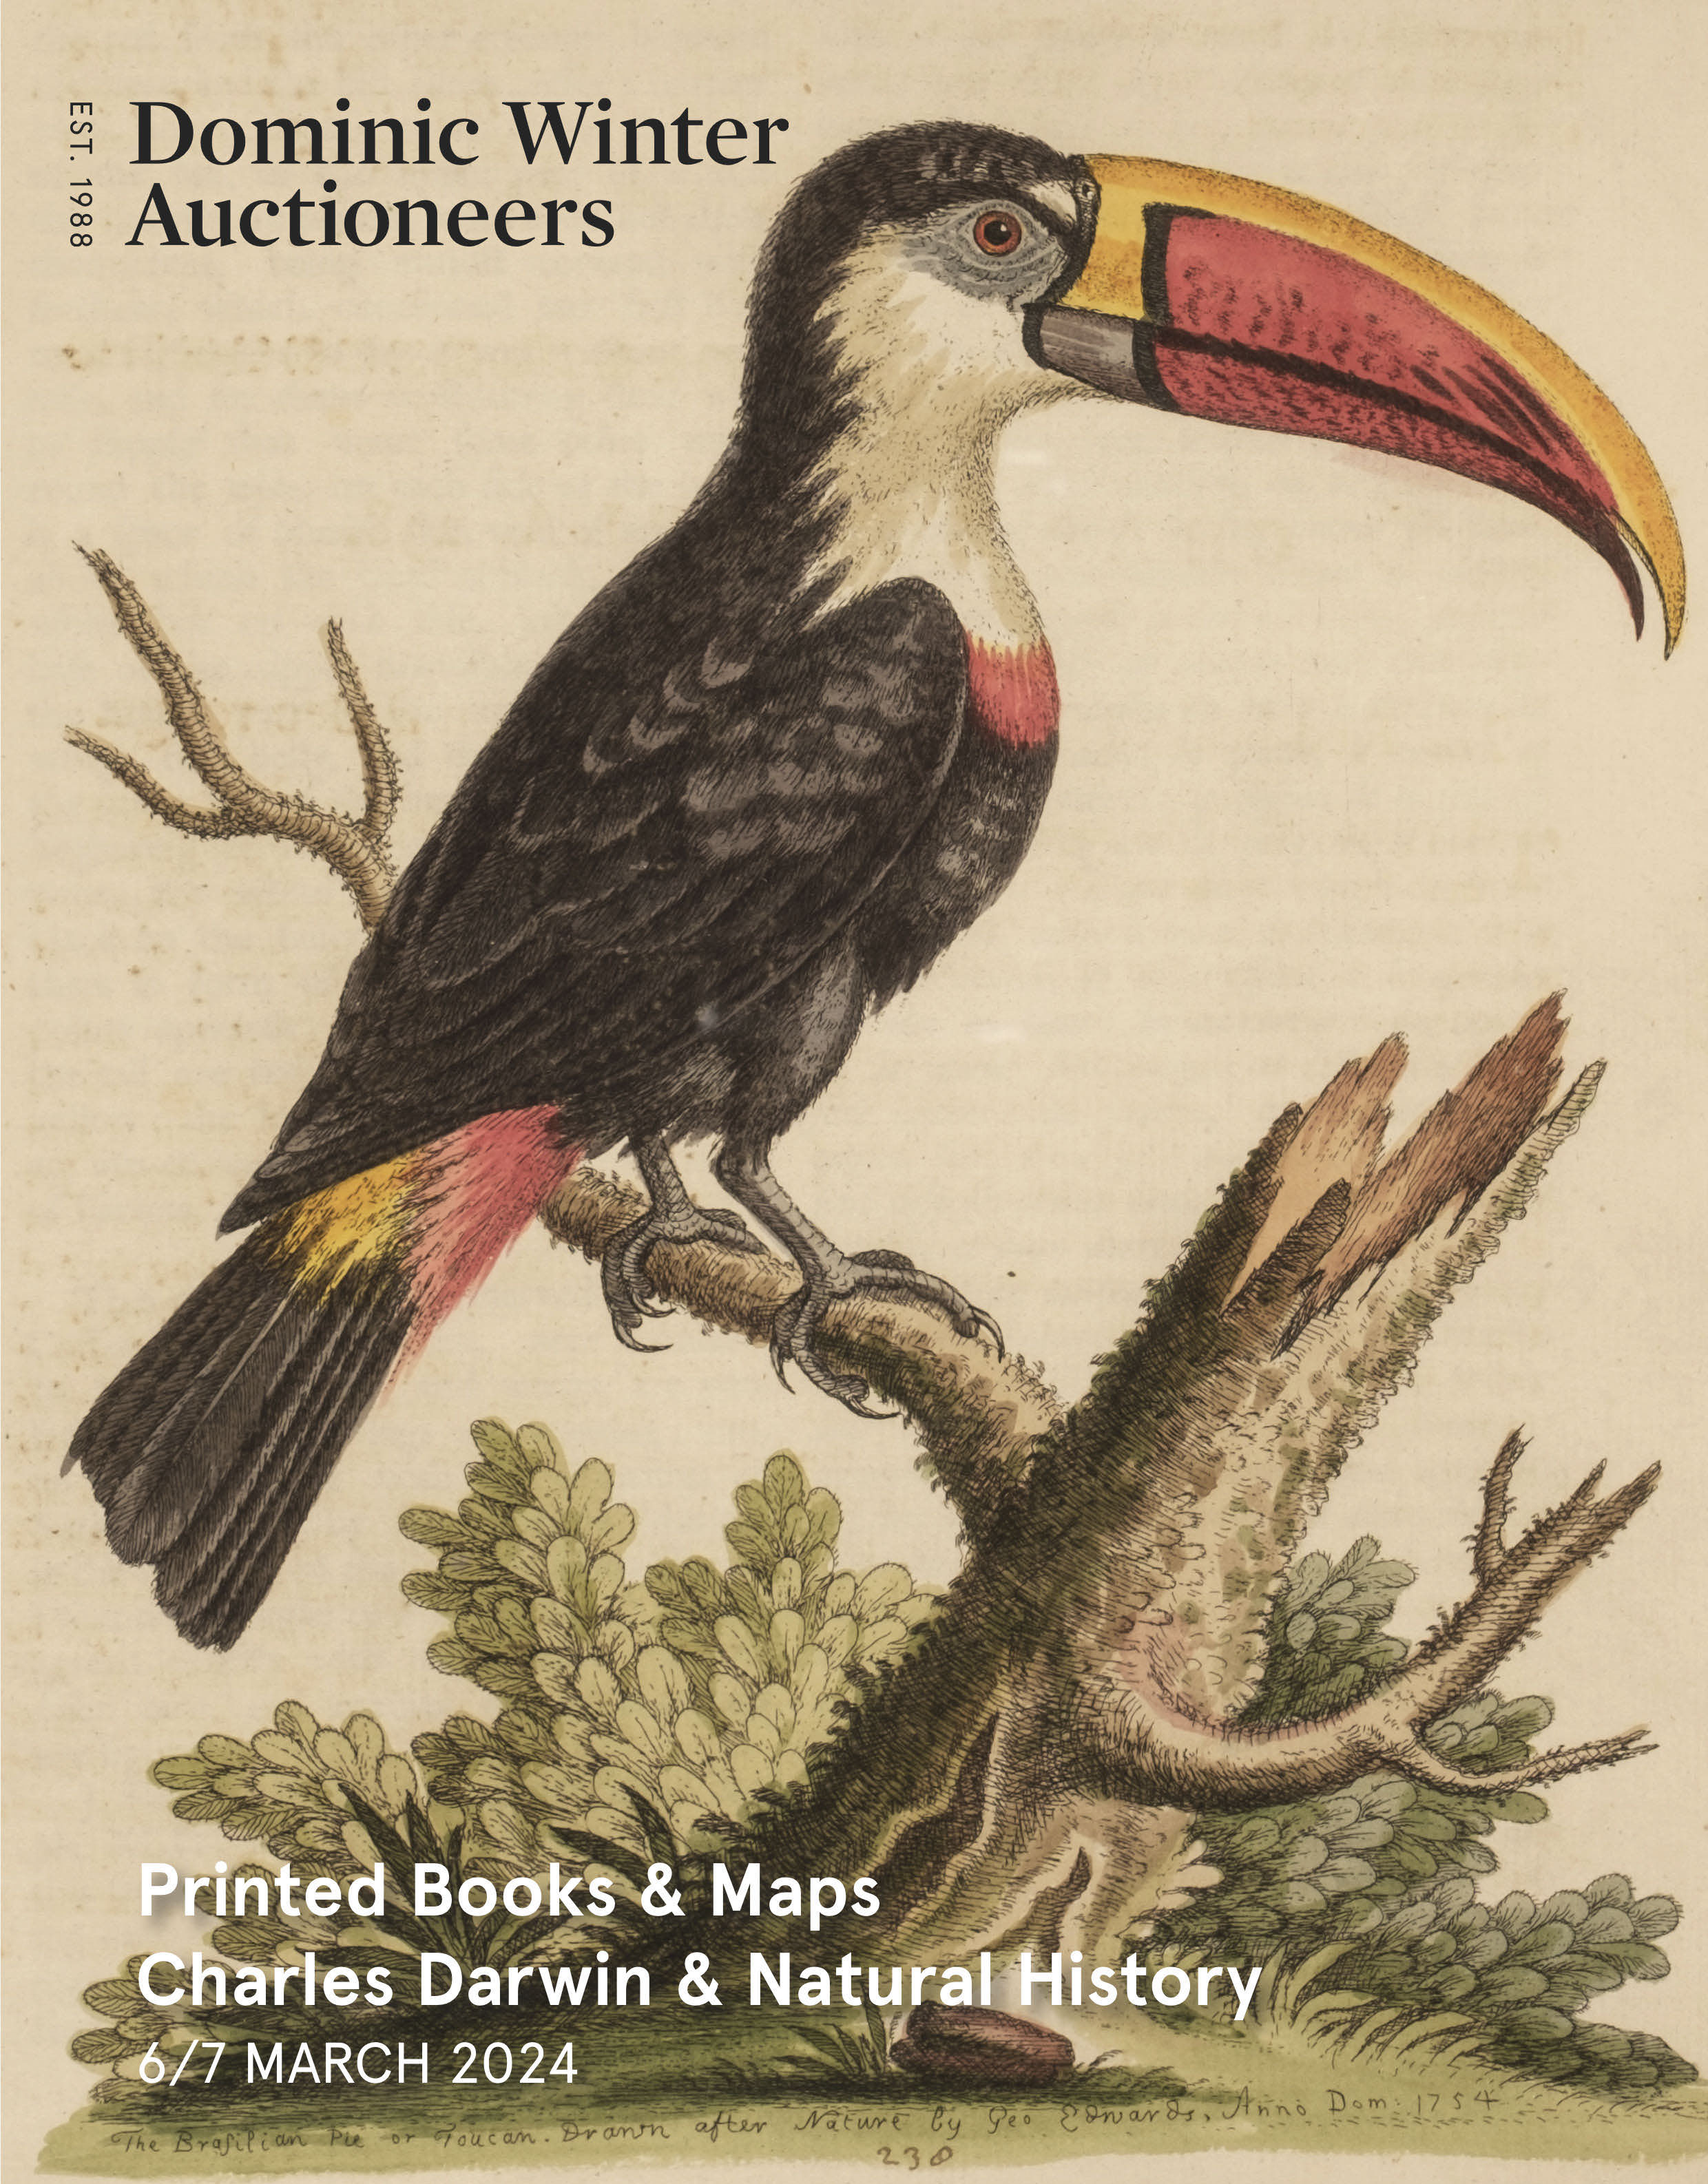 Printed Books, Maps & Playing Cards, Charles Darwin & Natural History